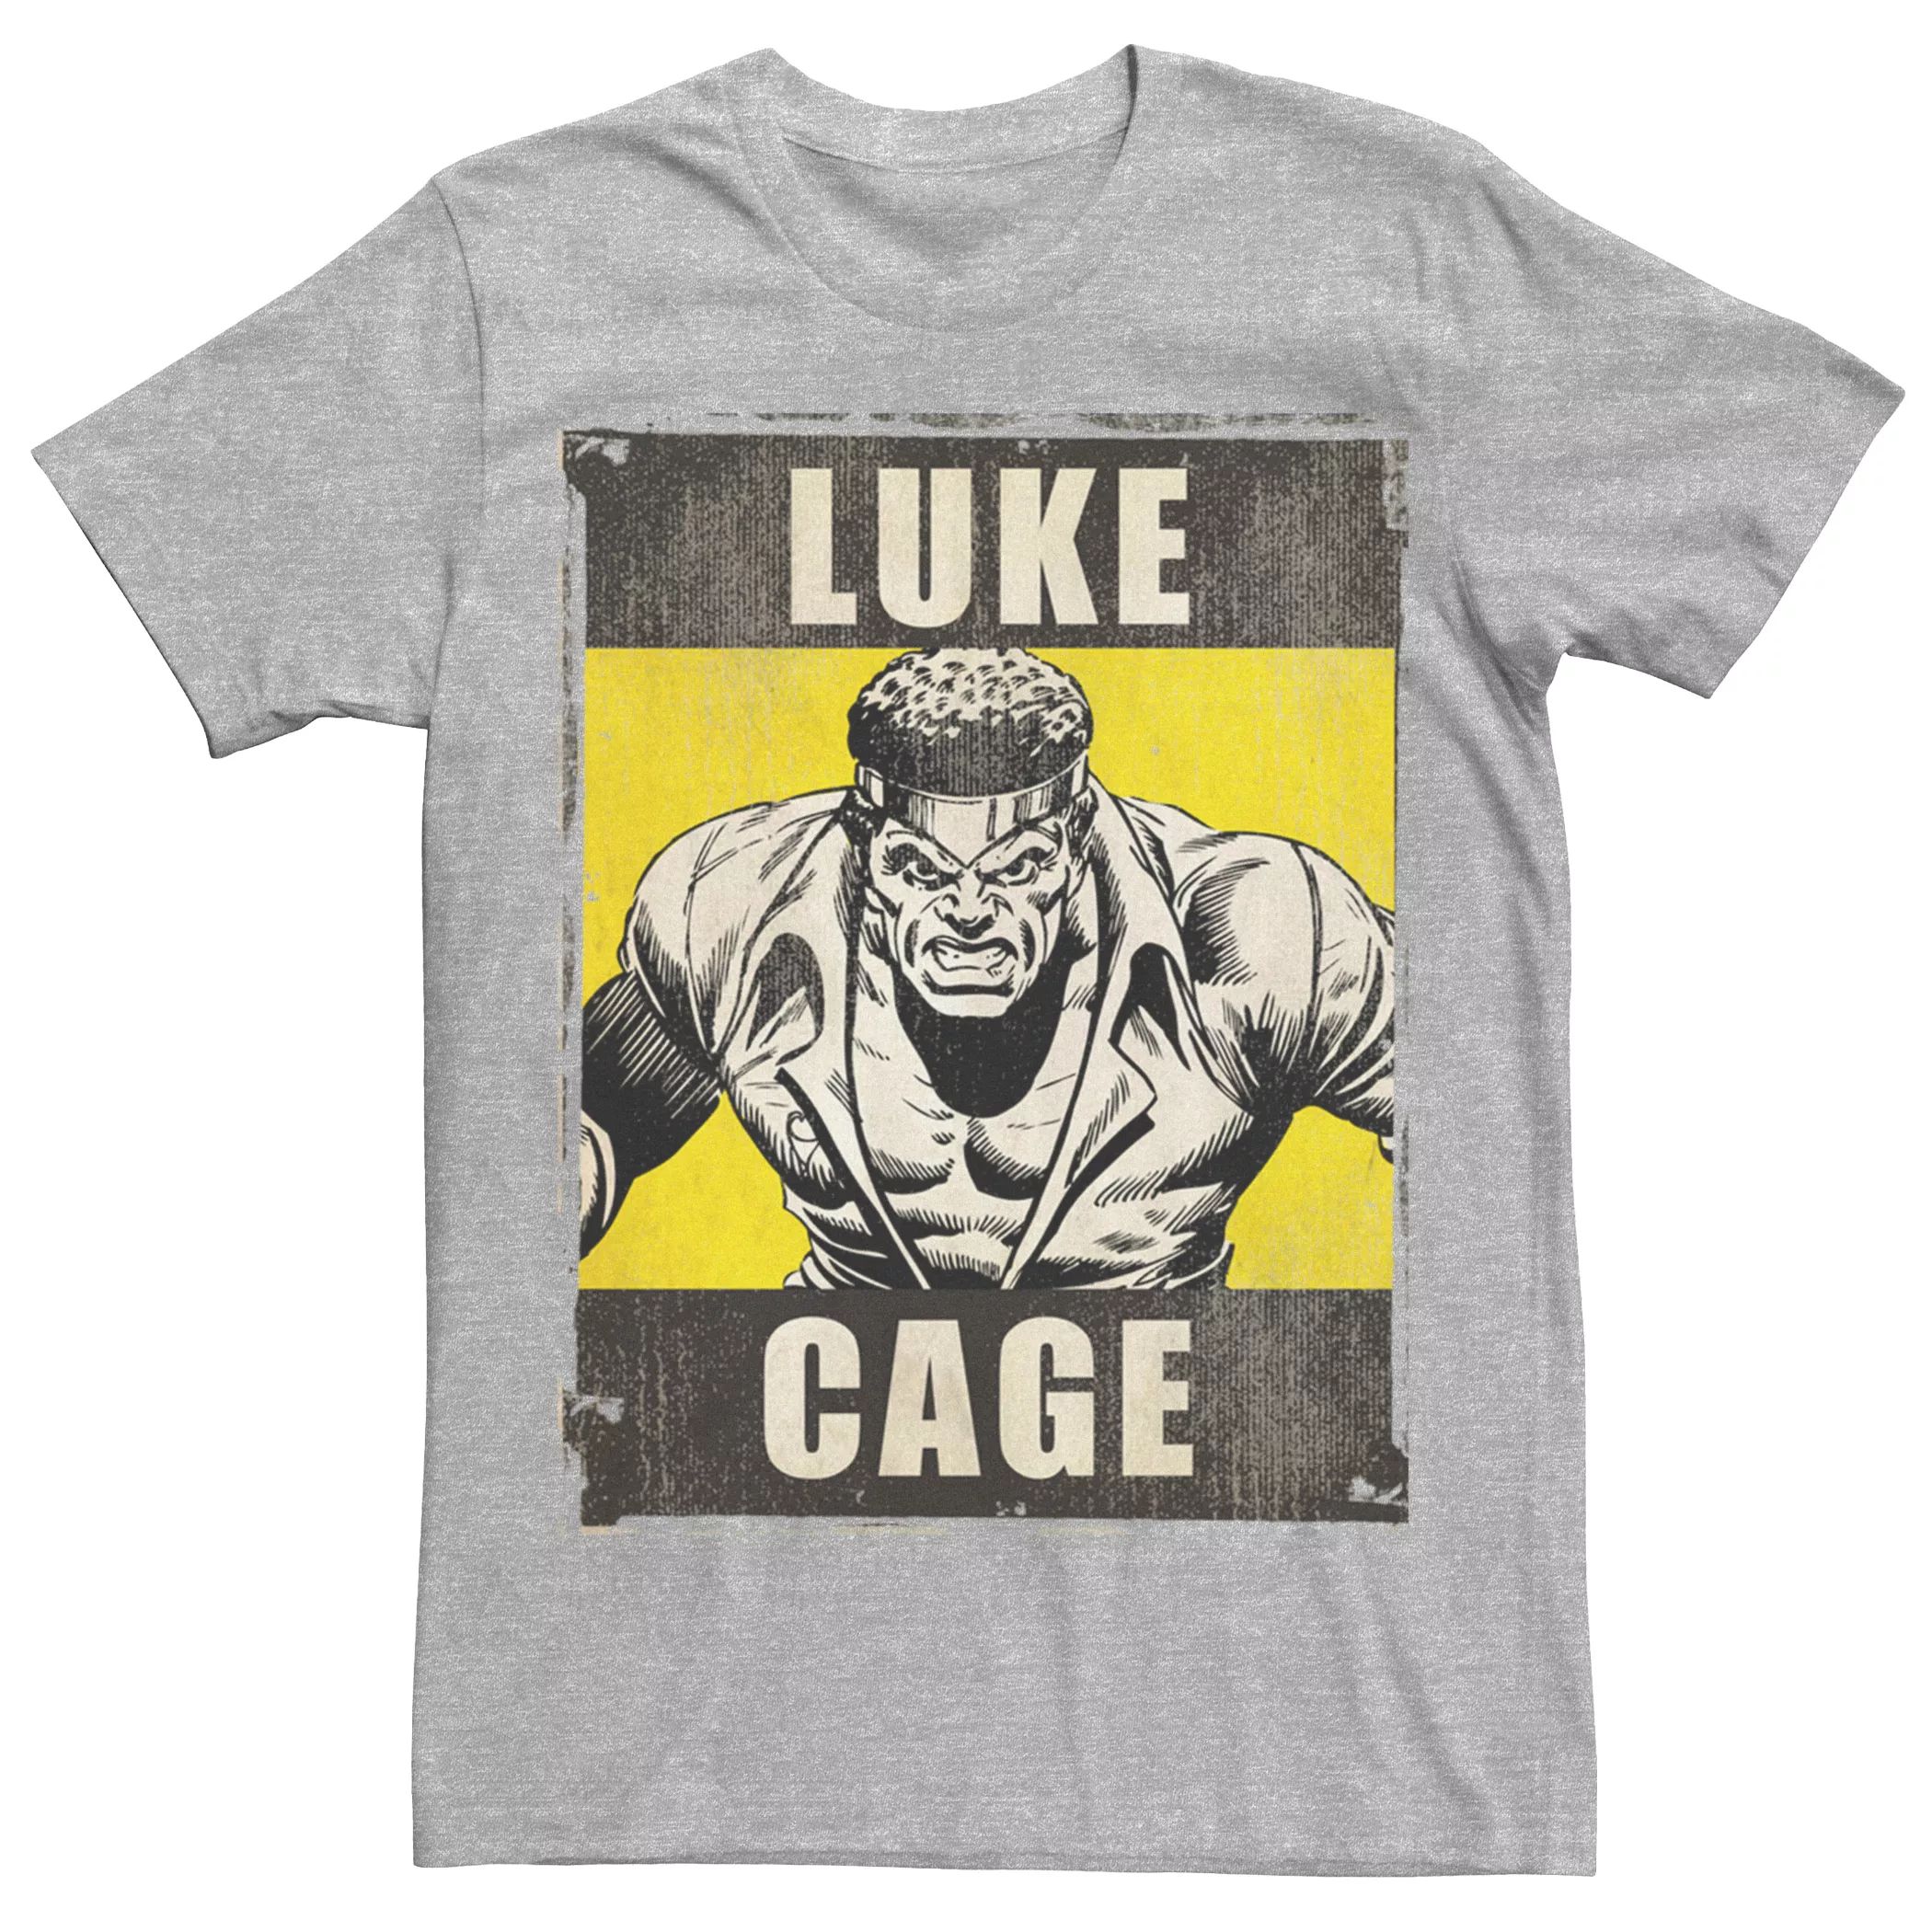 Мужская футболка с графическим рисунком в стиле ретро Marvel Luke Cage Licensed Character мужская футболка marvel luke cage hero for class president licensed character